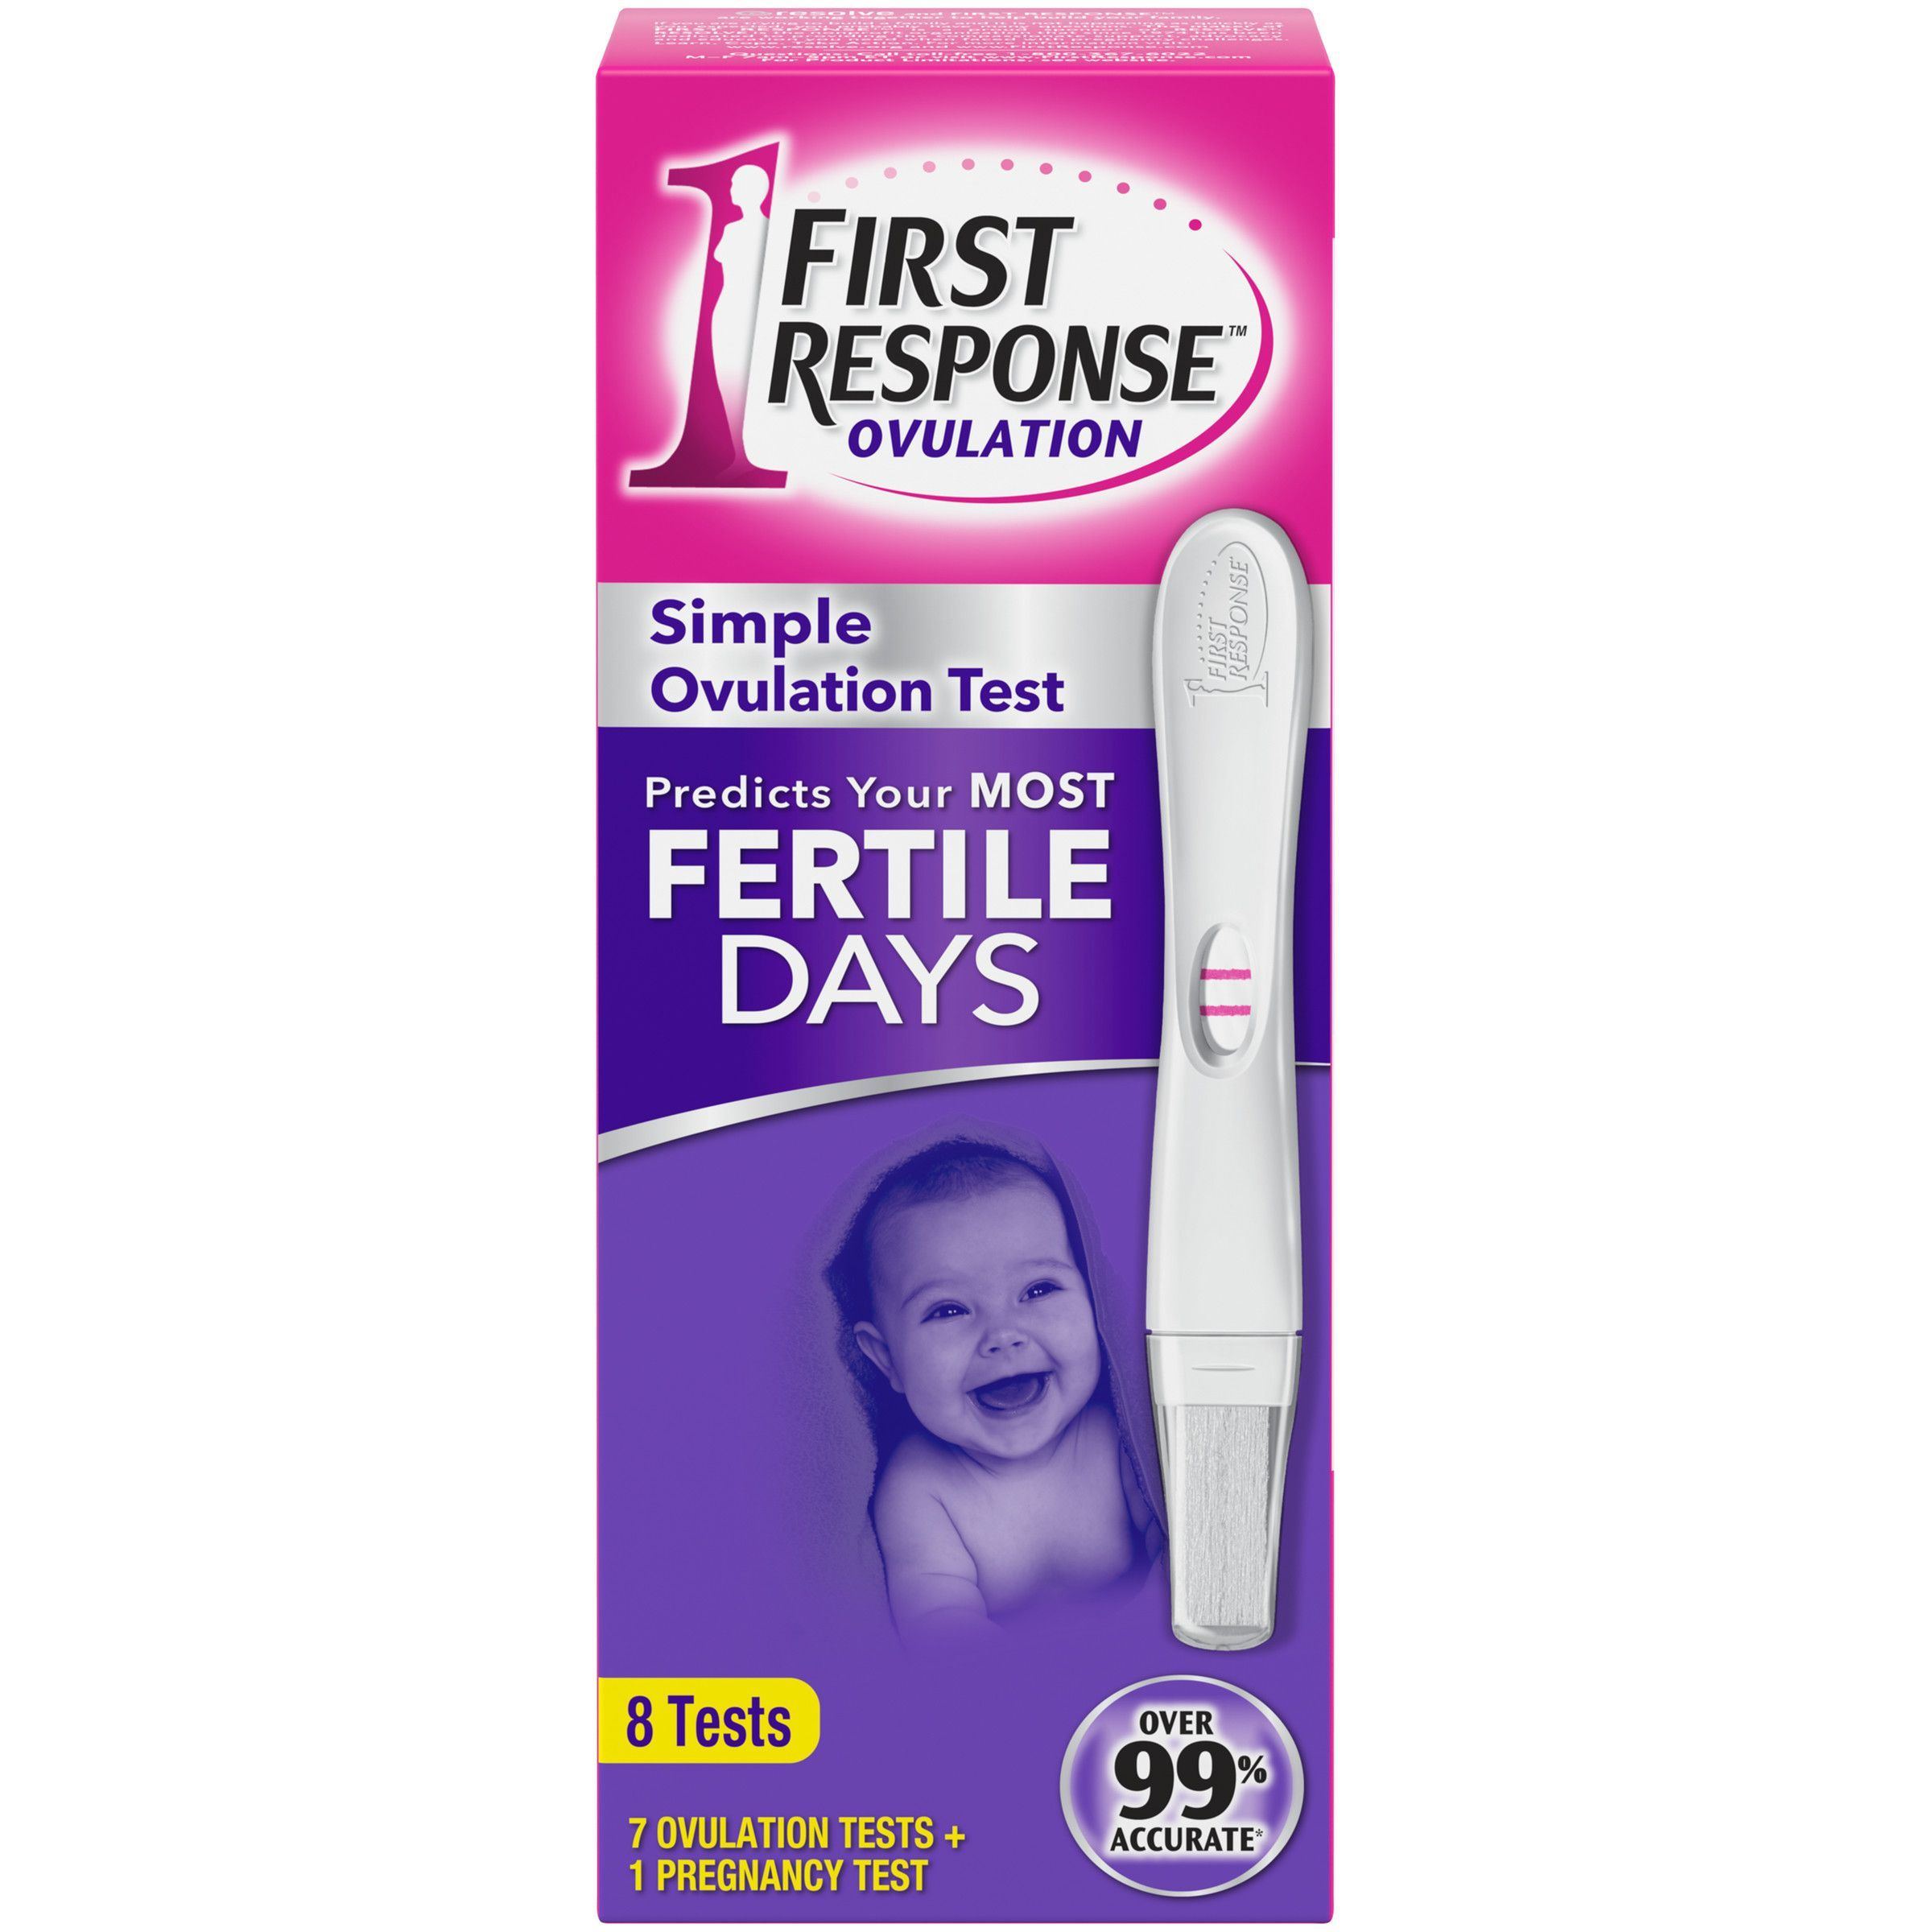 Aim strip pregnancy test retailers